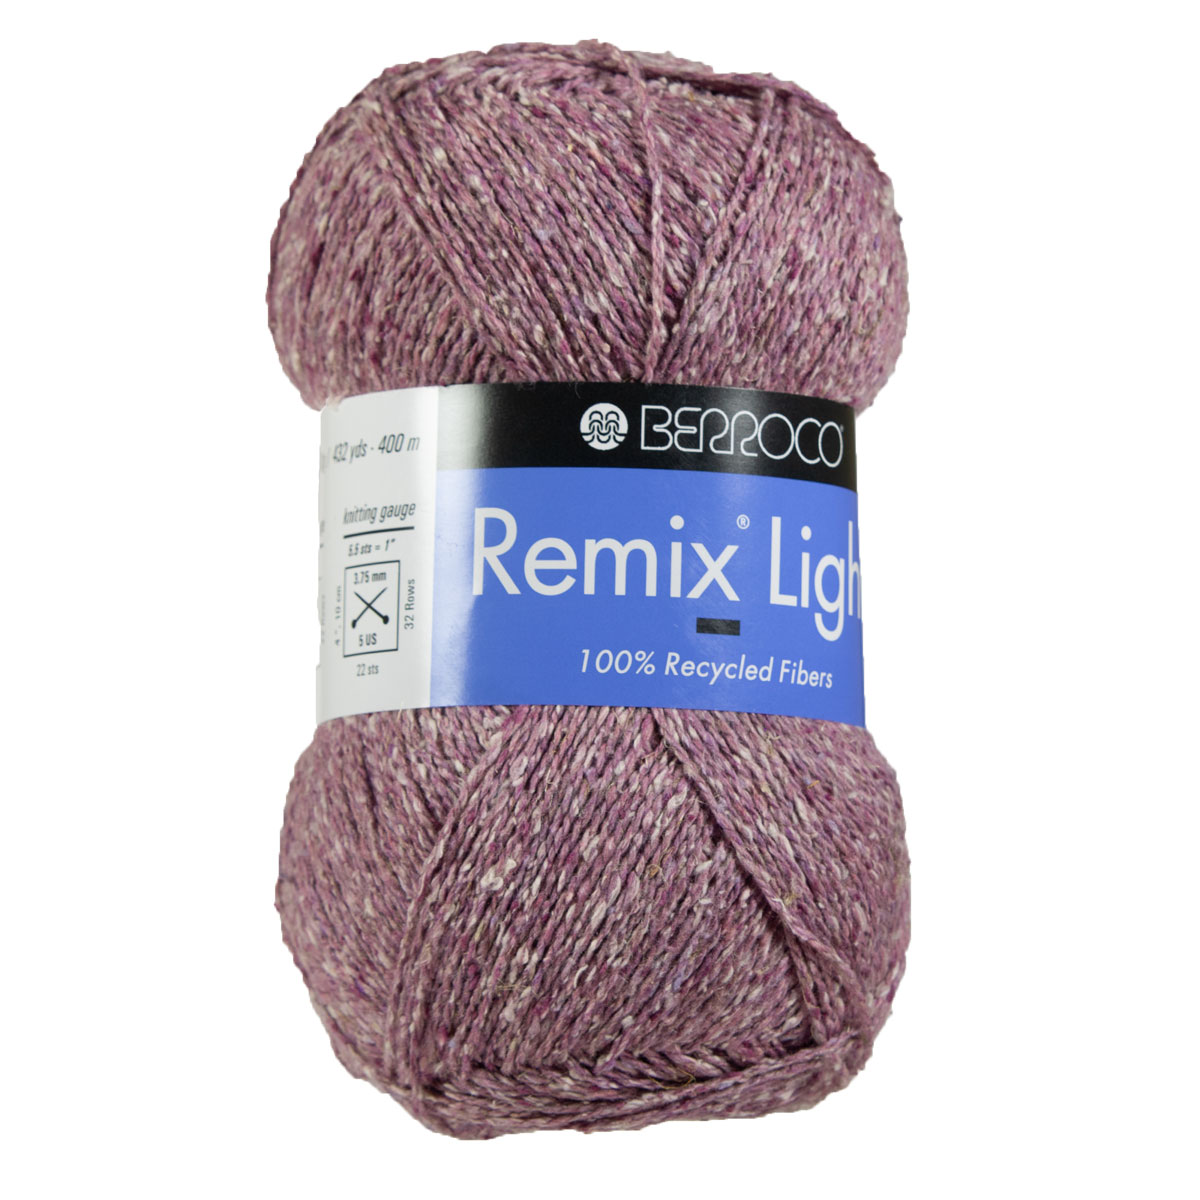 Berroco Remix Light Yarn - 6971 Cameo Pink at Jimmy Beans Wool